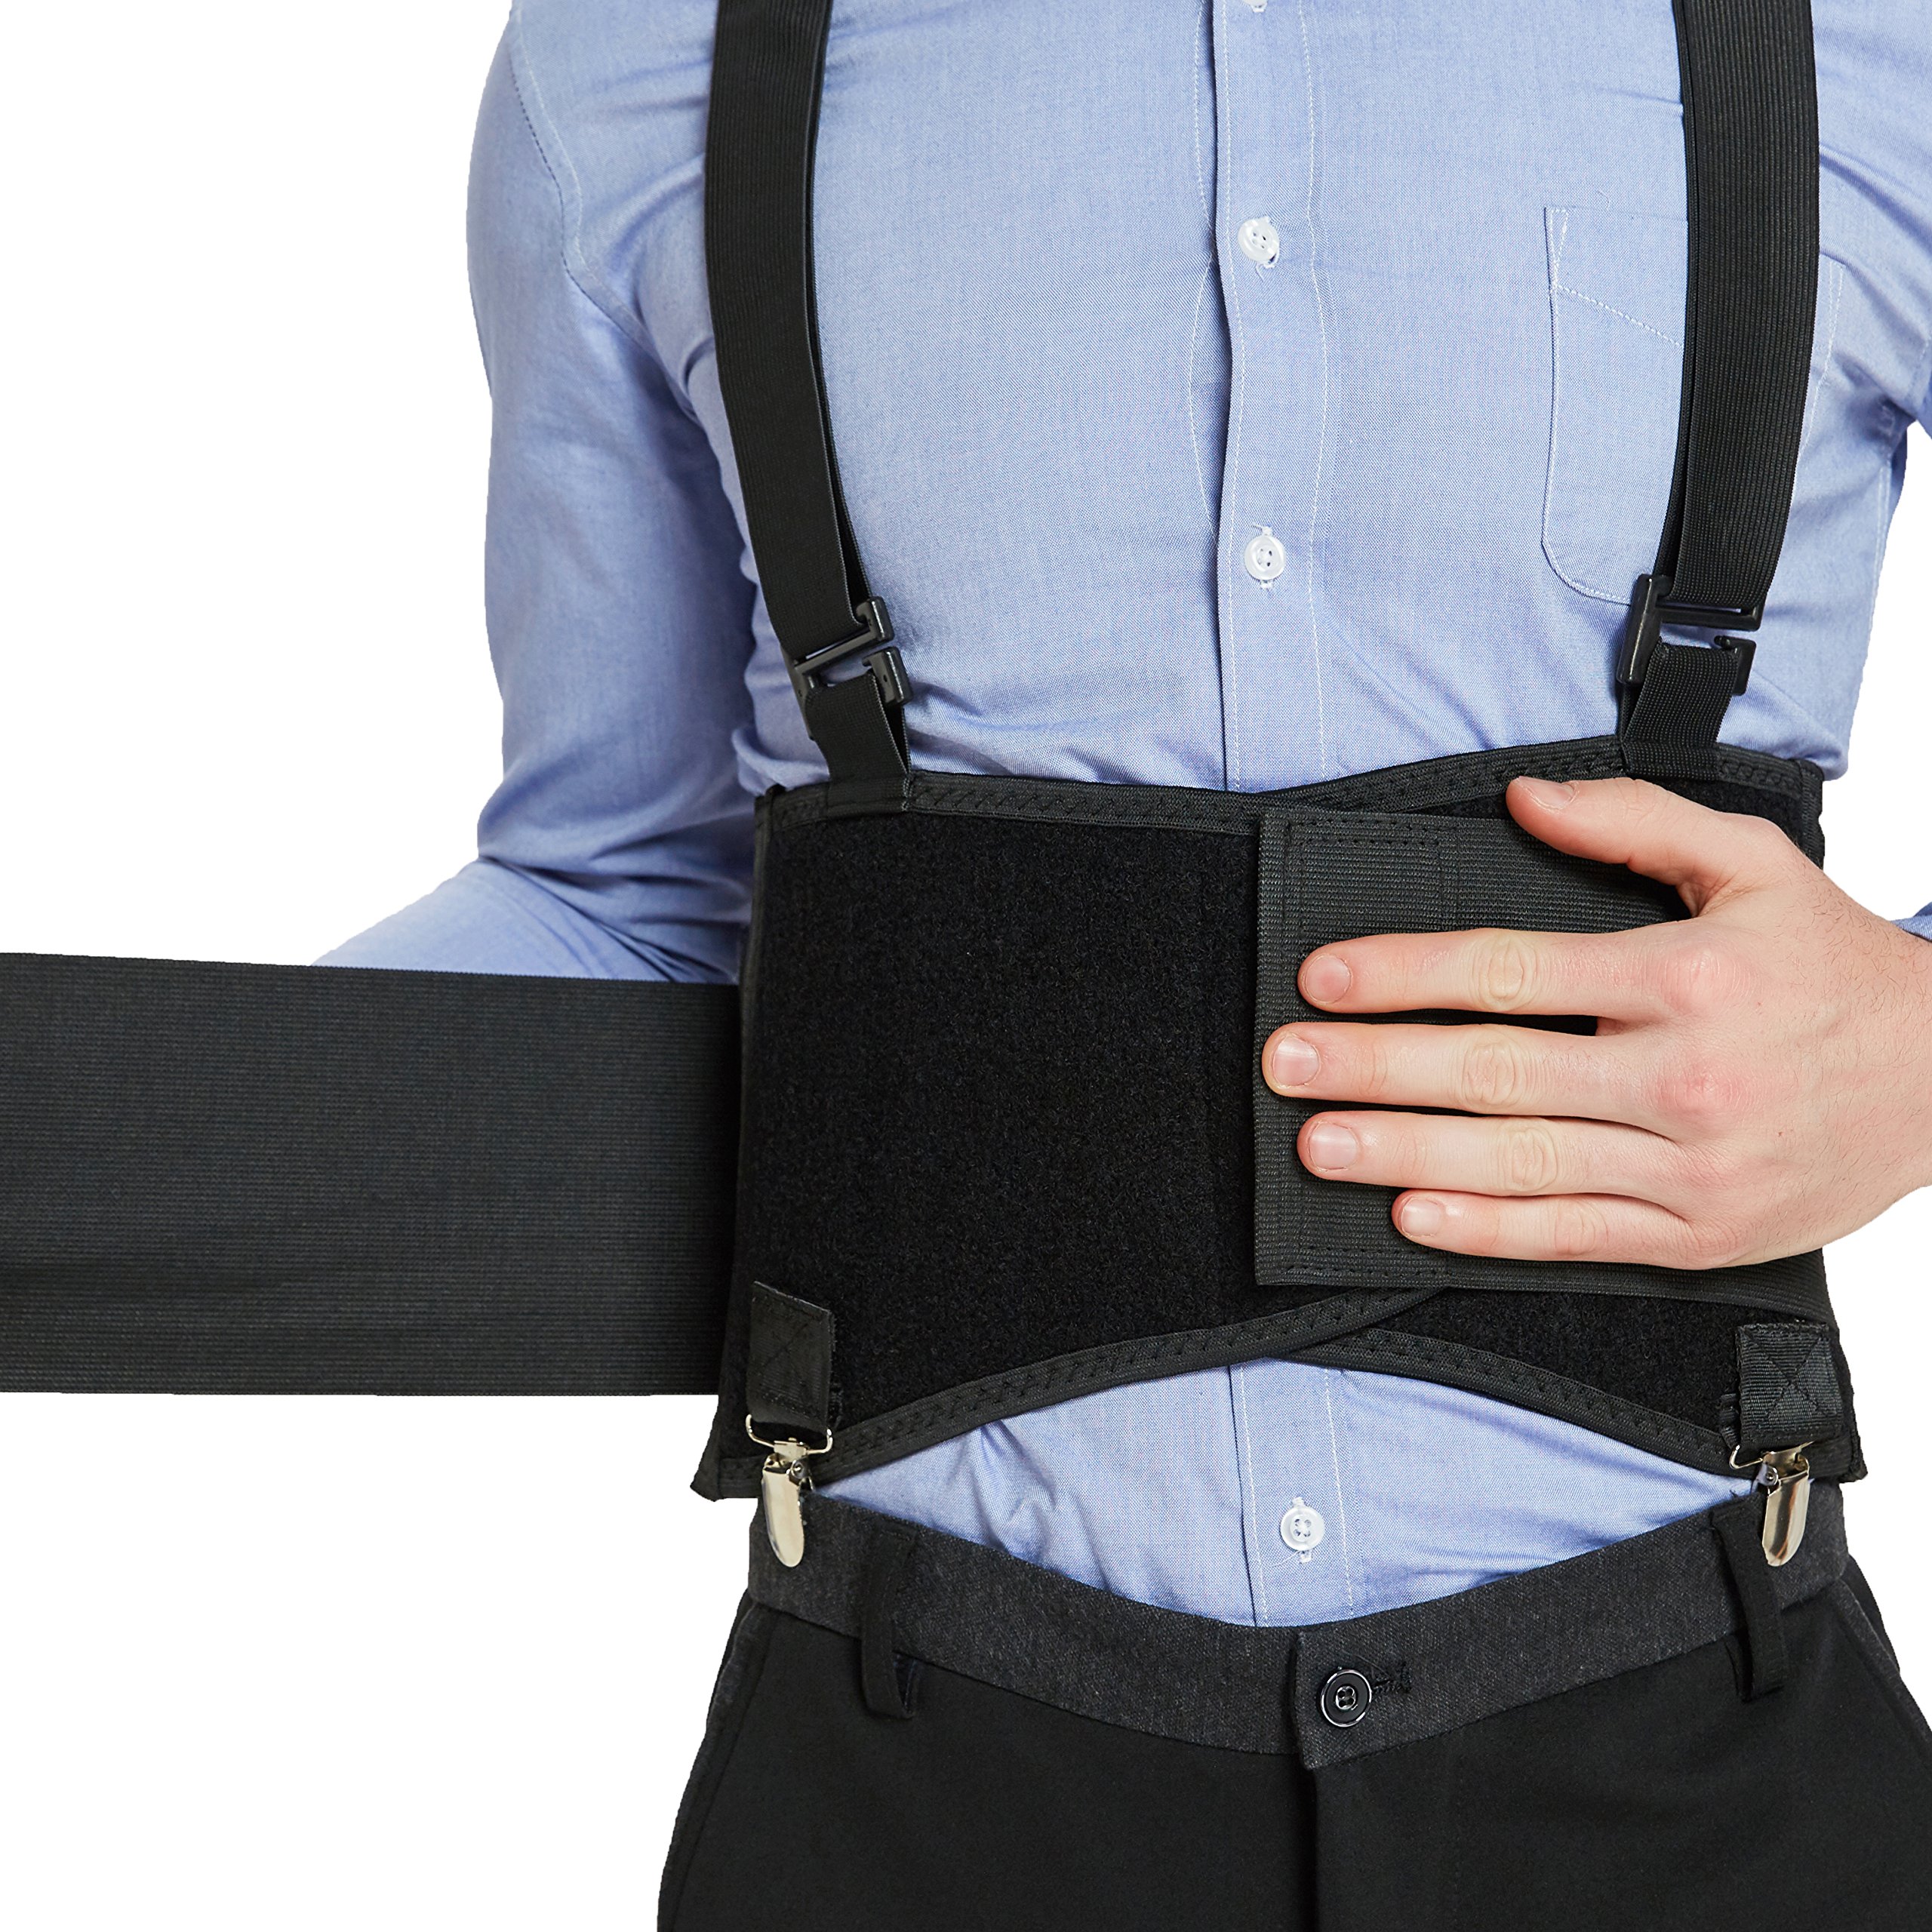 NeoTech Care Lumbar Brace with Removable Pants Clips & Detachable Suspenders  - Back Support Belt - Adjustable, Light, Breathable - Shoulder Holsters -  Work, Posture - Black (Size L) Large (Pack of 1)